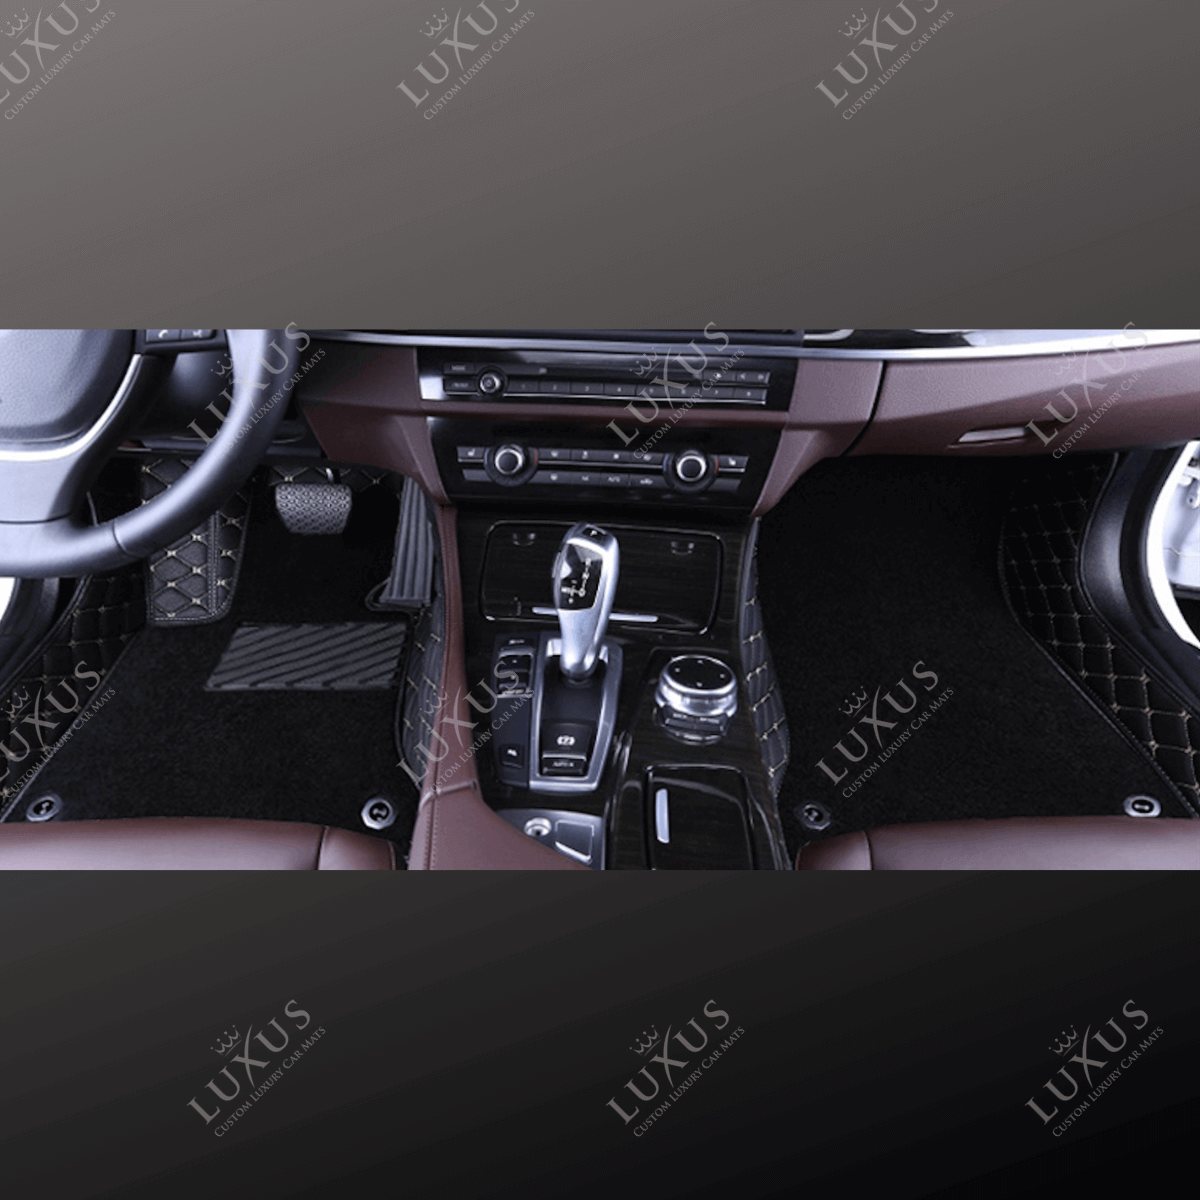 Luxus Car Mats™ - svart og blå søm Luksus bilmattesett